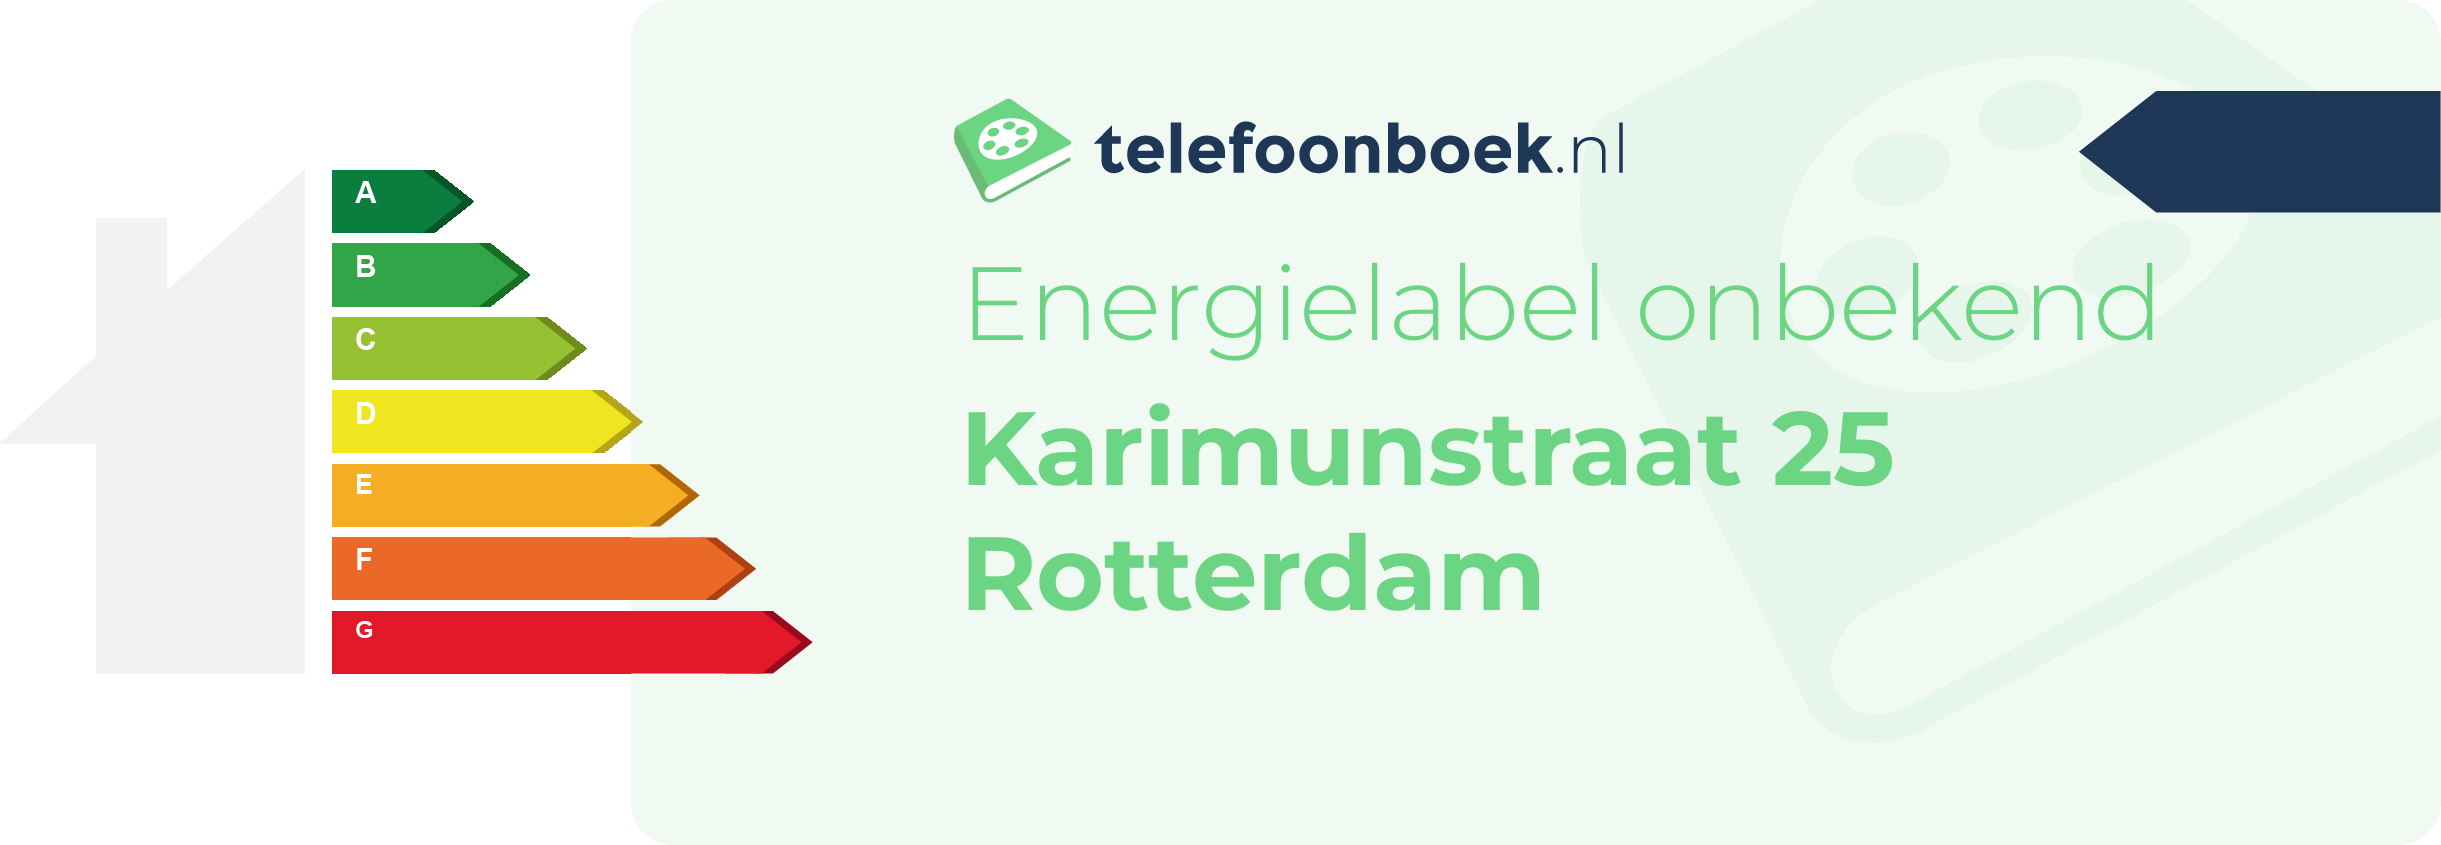 Energielabel Karimunstraat 25 Rotterdam